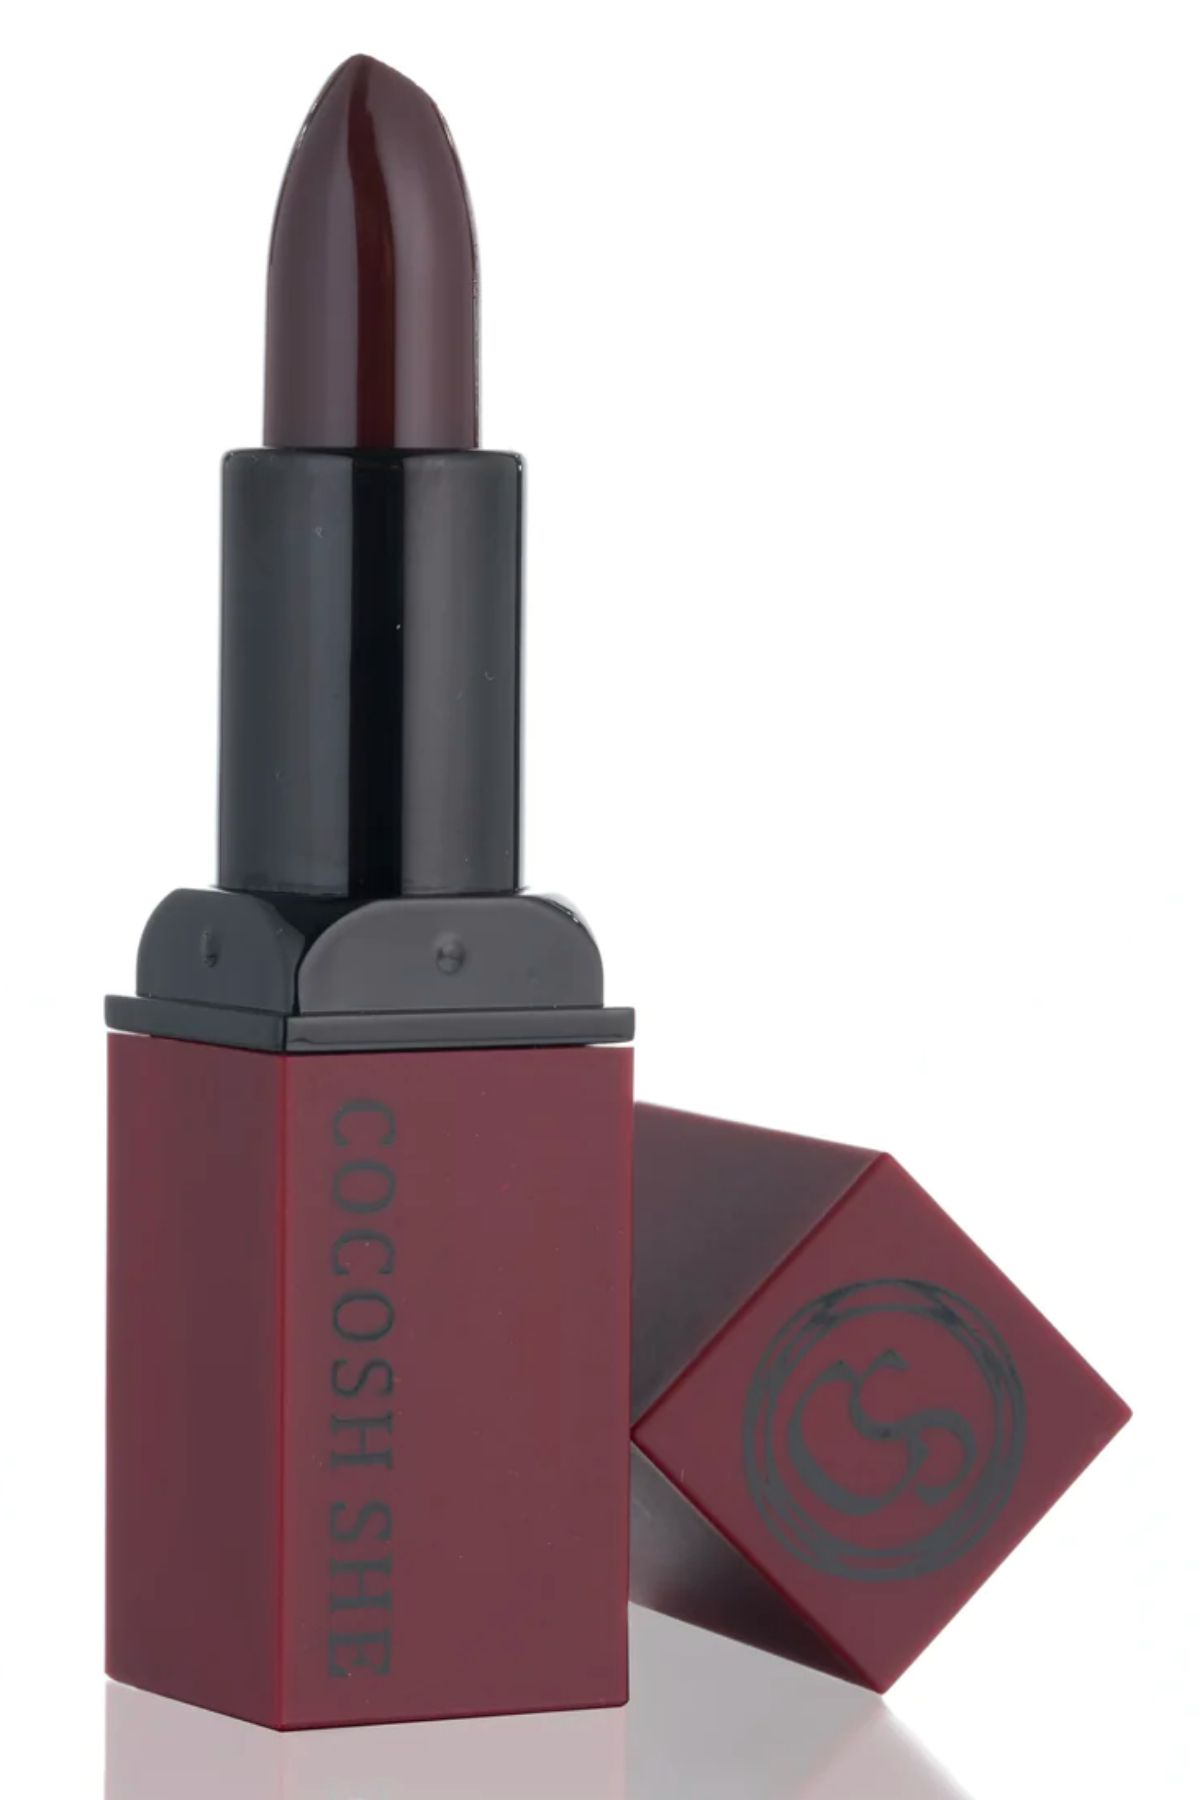 Cocosh She Color Creamy Lipstick Ruj 01 Mulberry, Nemlendirici Etki, Kremsi Formül, Yumuşak Bitişli